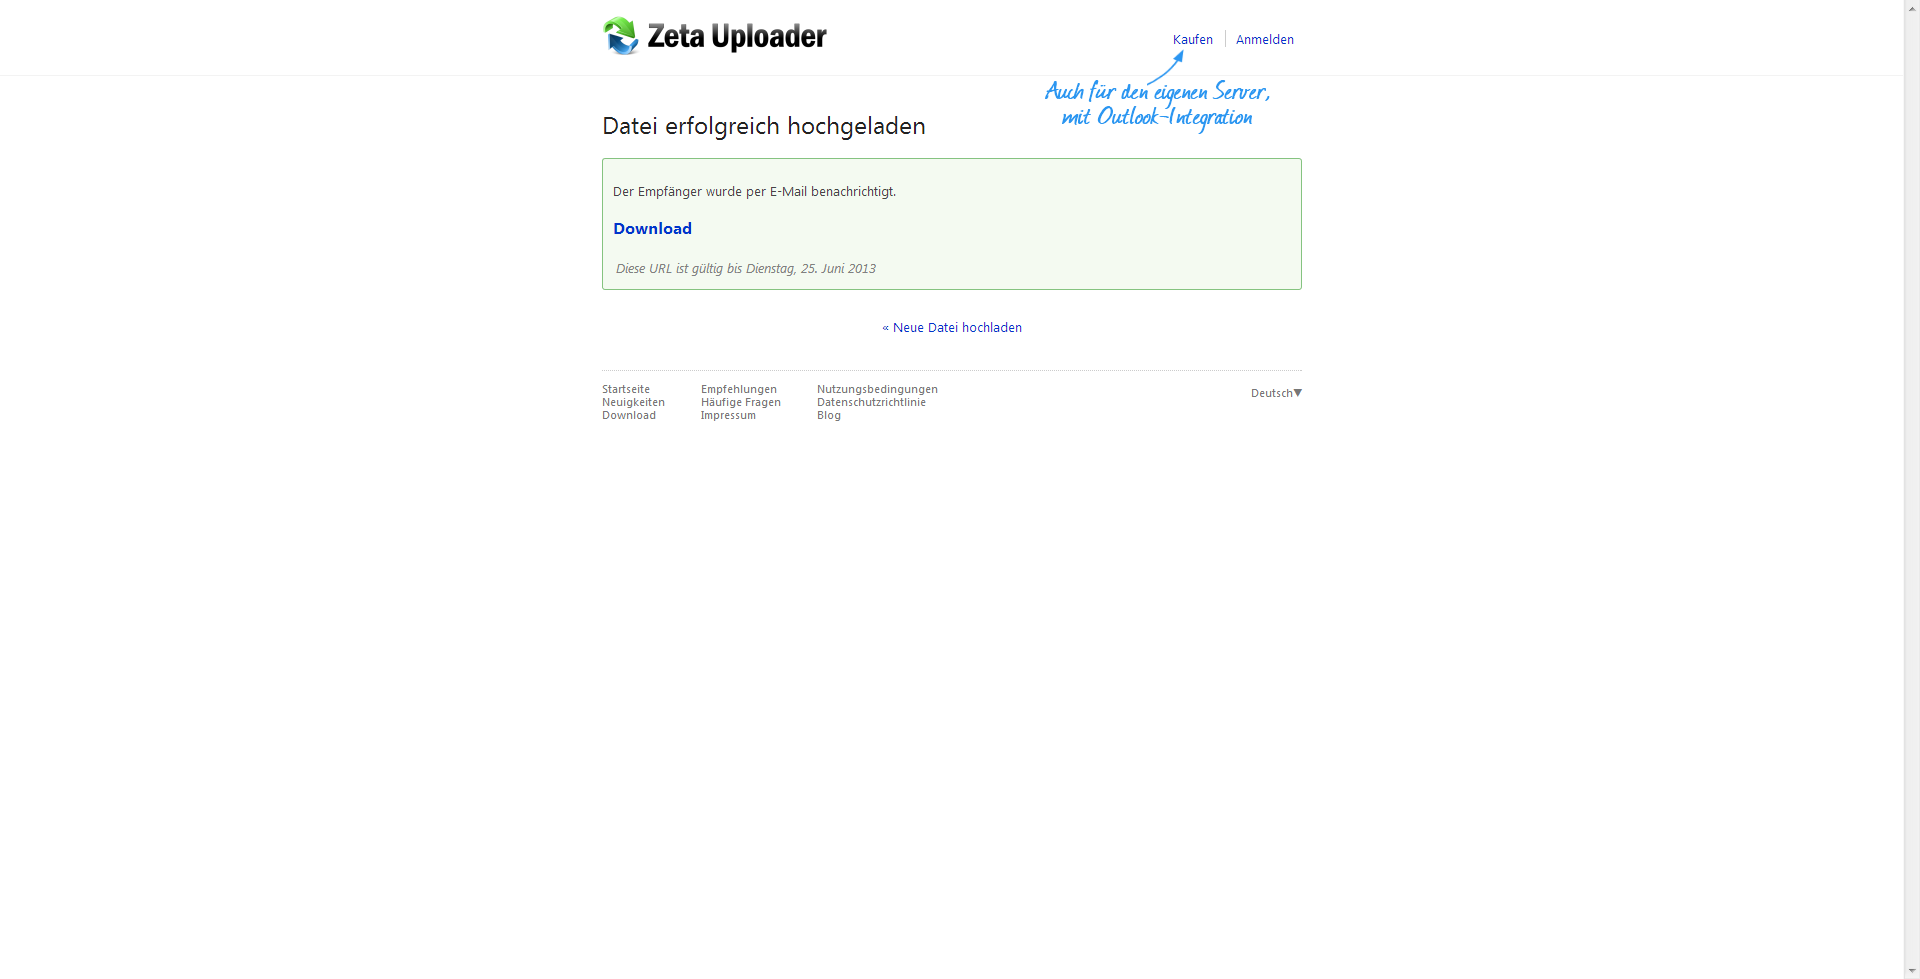 zeta-uploader-bestaetigung-470.png?nocache=1371720504610